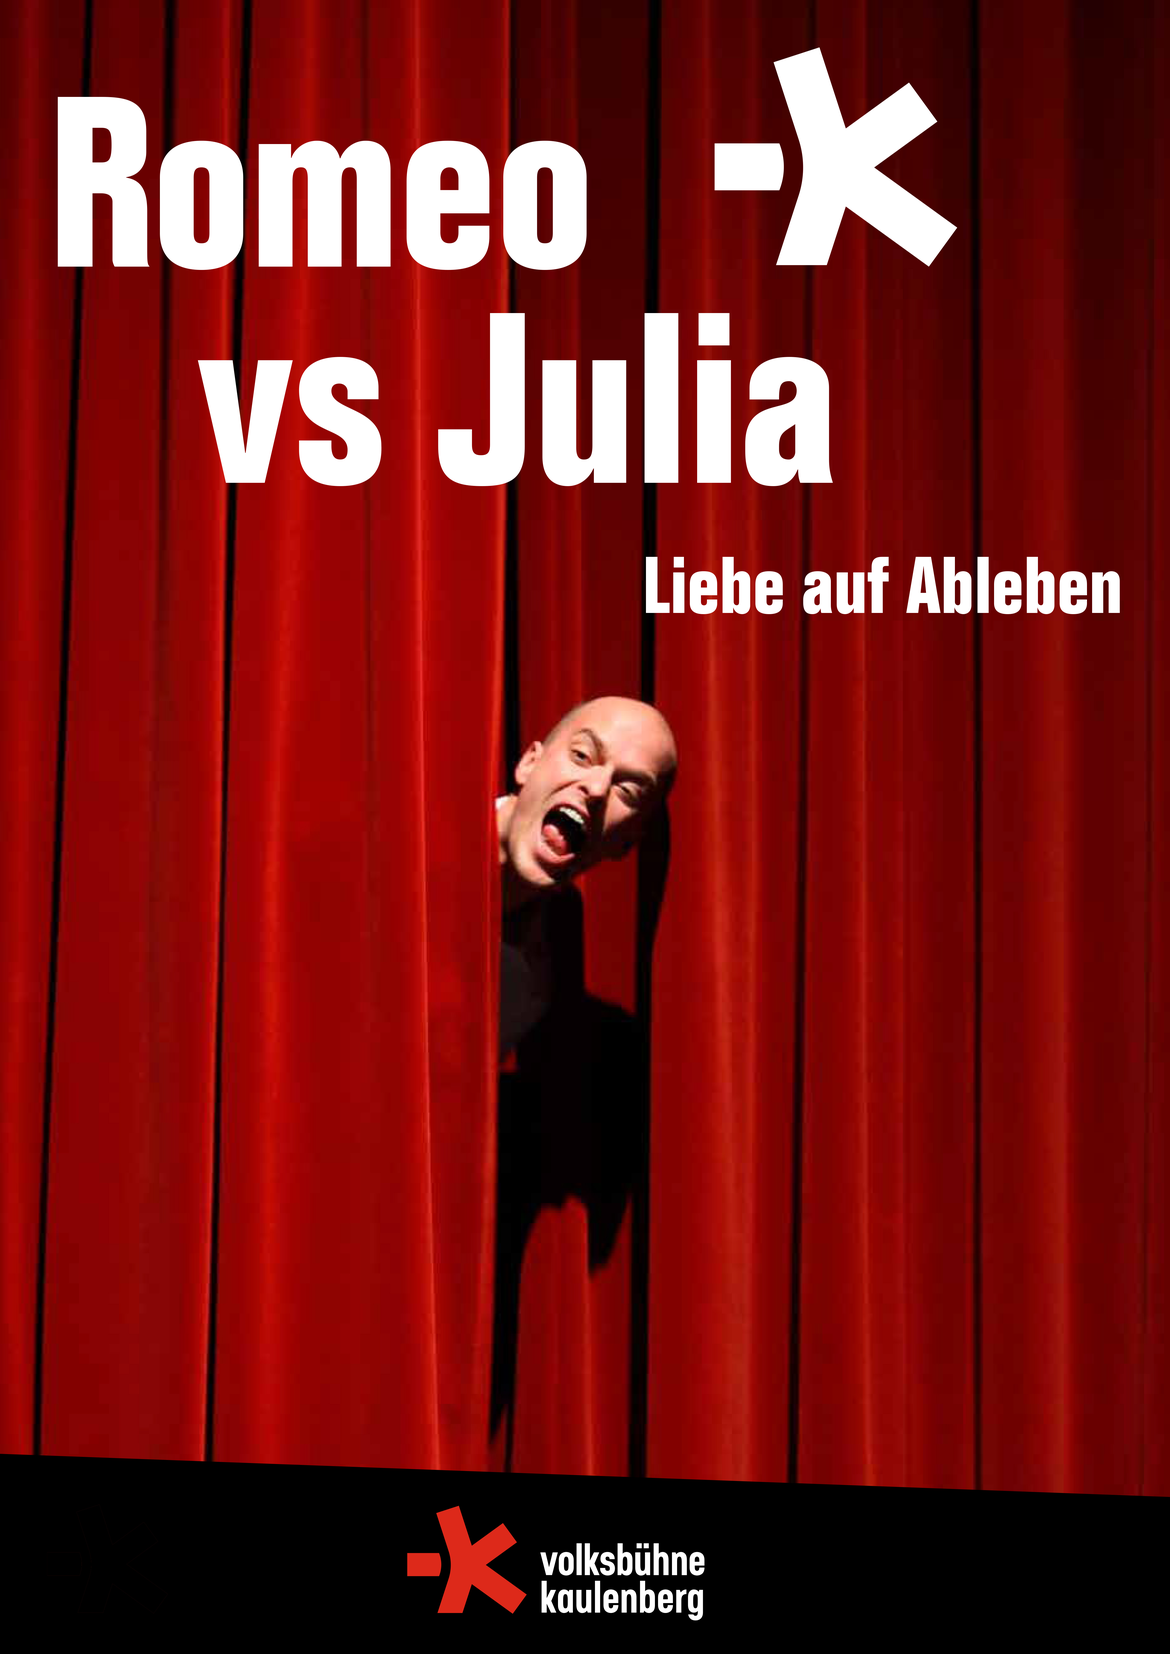 Romeo vs Julia - Liebe auf Ableben